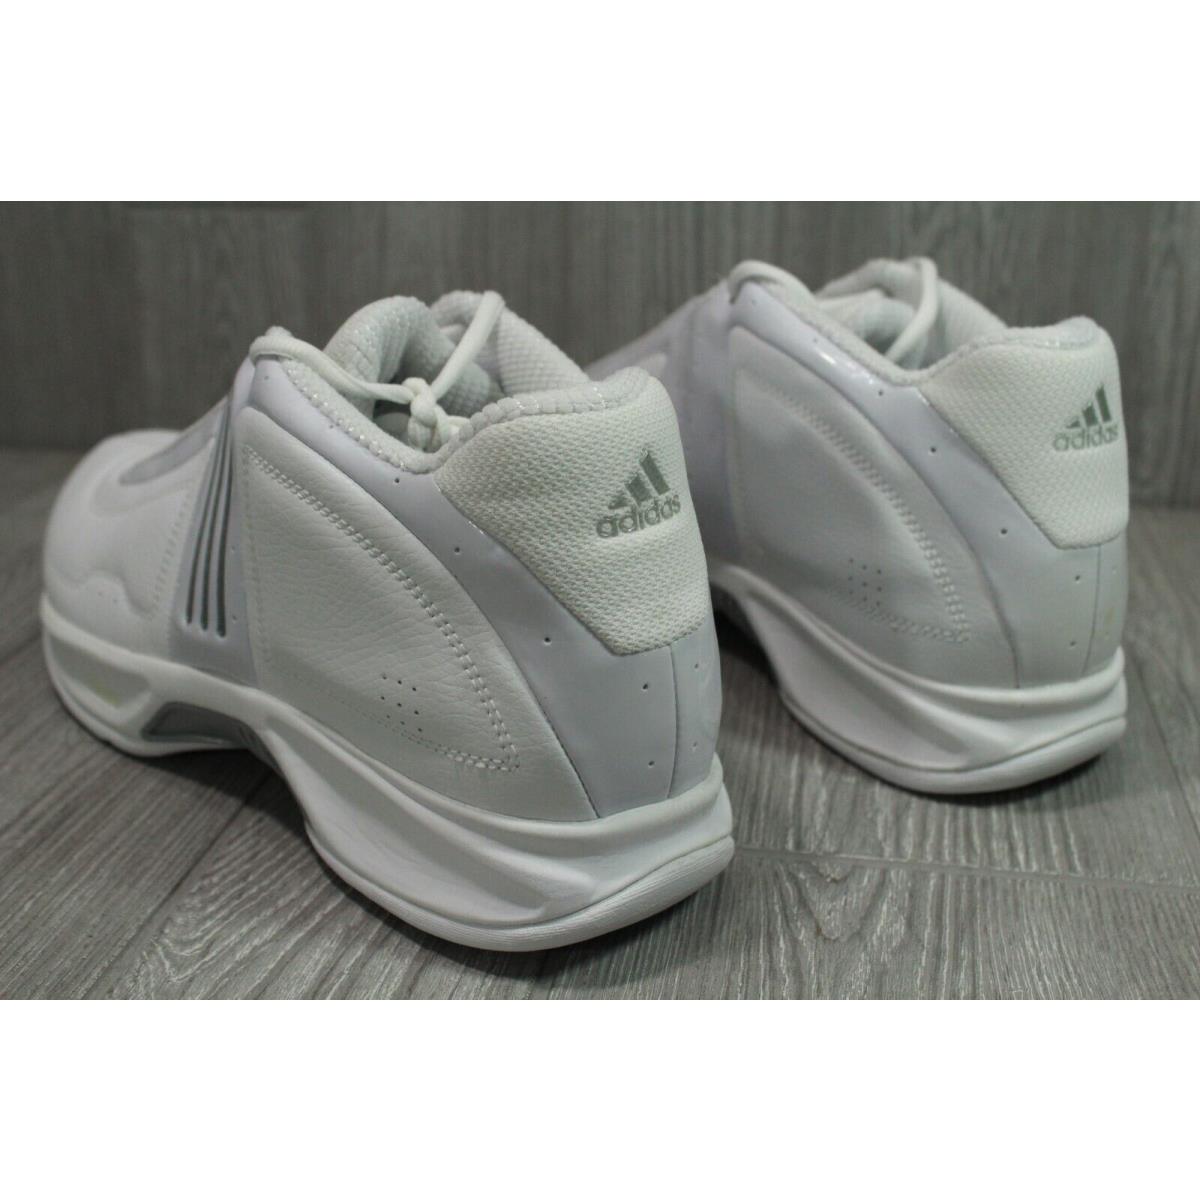 Adidas shoes Vintage - White 3